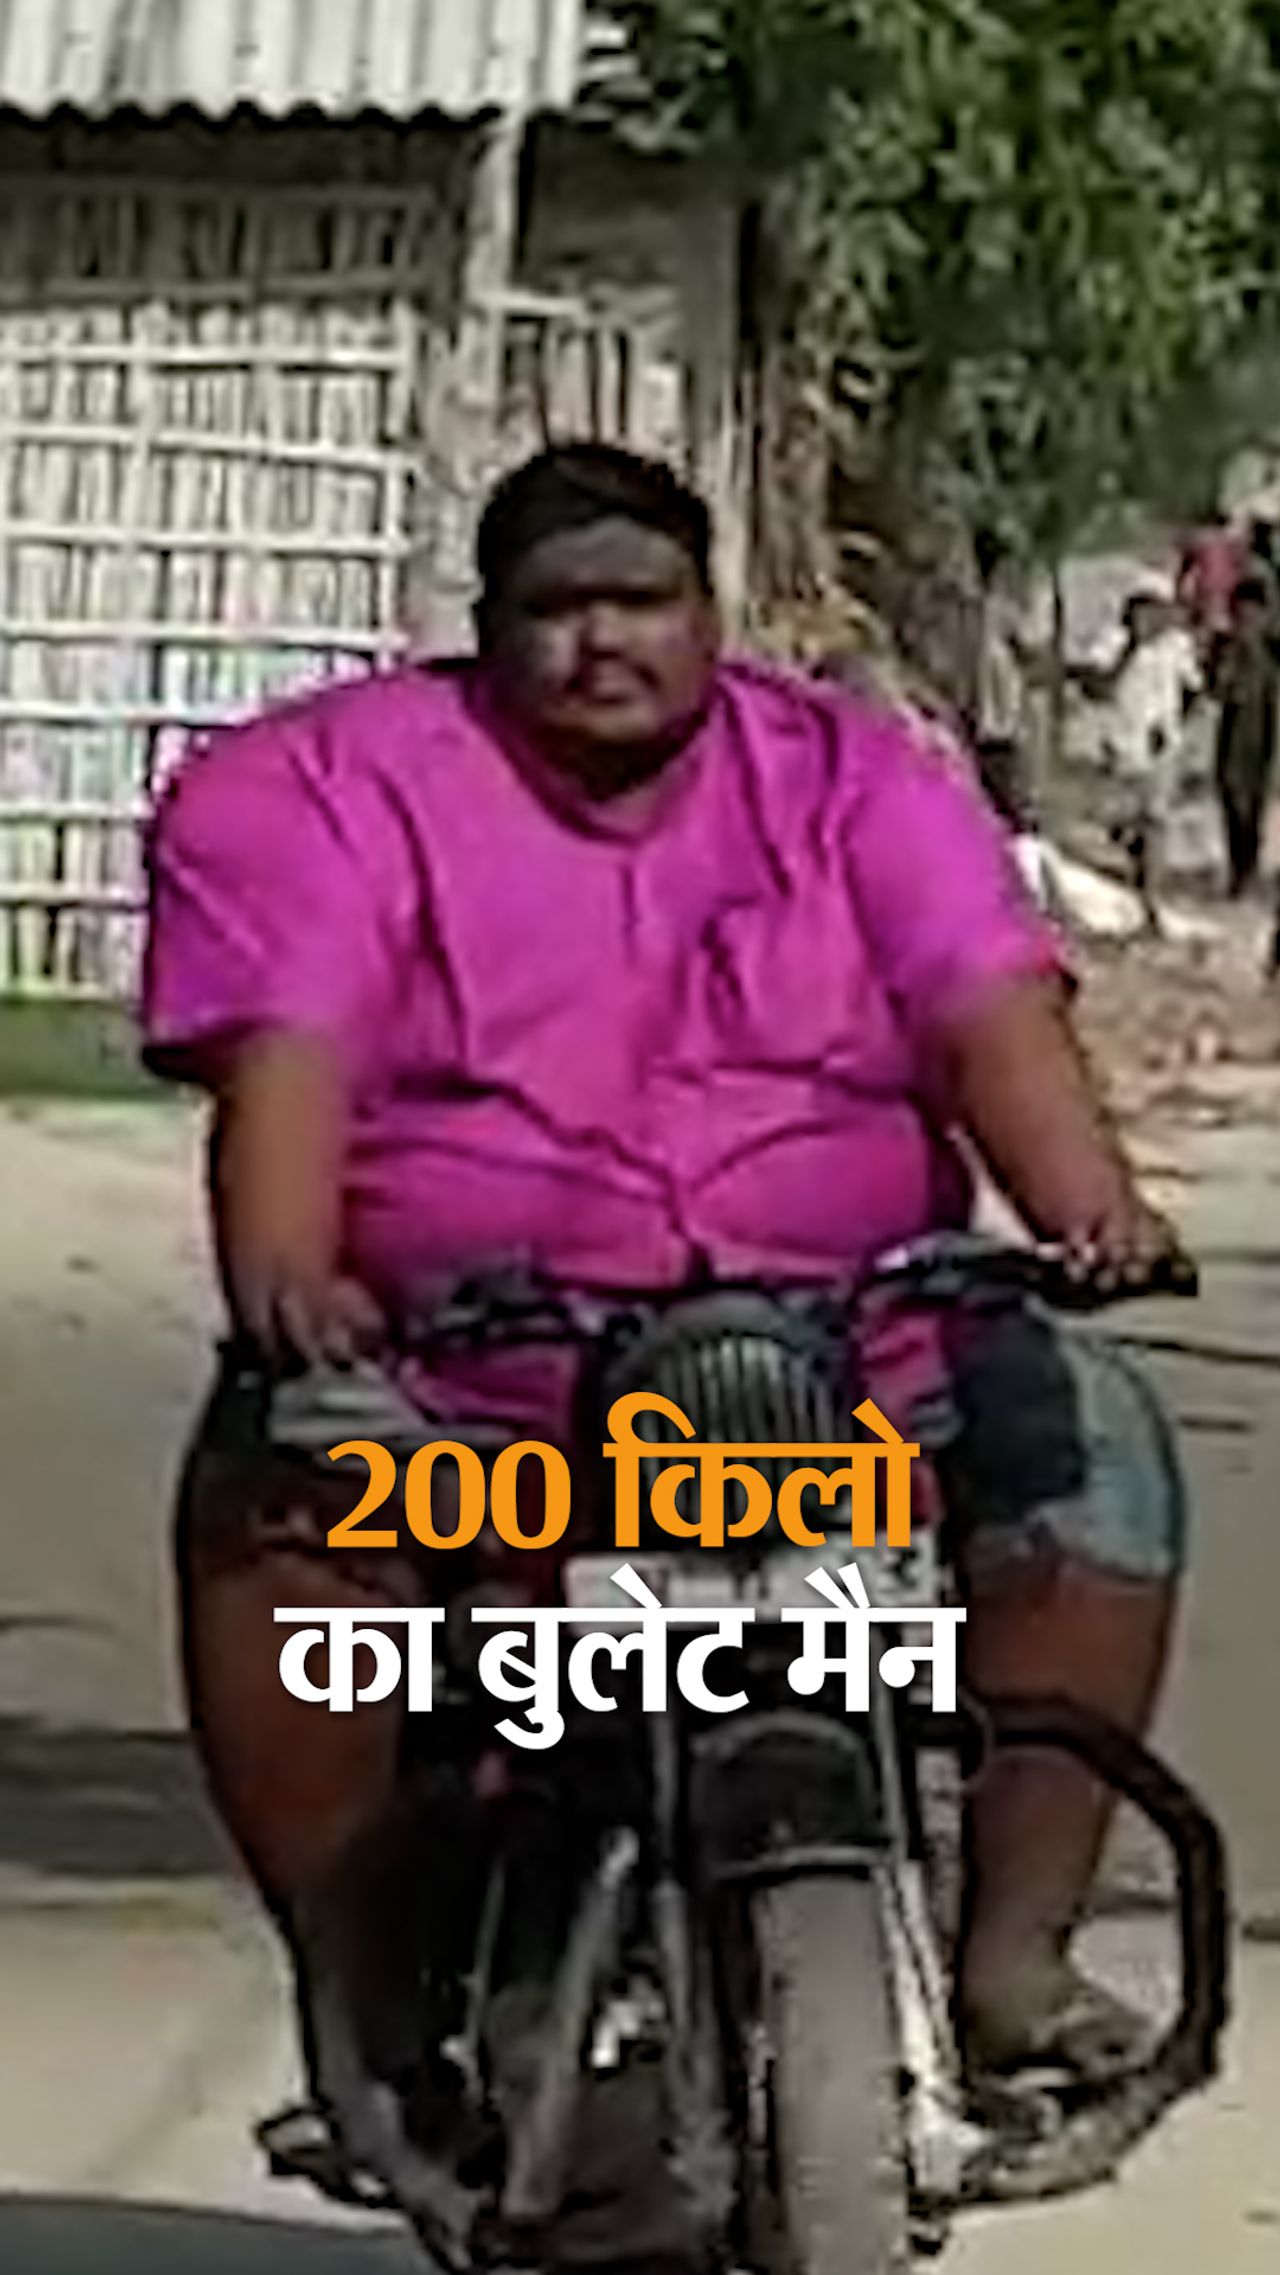 Rafiq Adnan weighs 2 quintals, means more than 200 kg